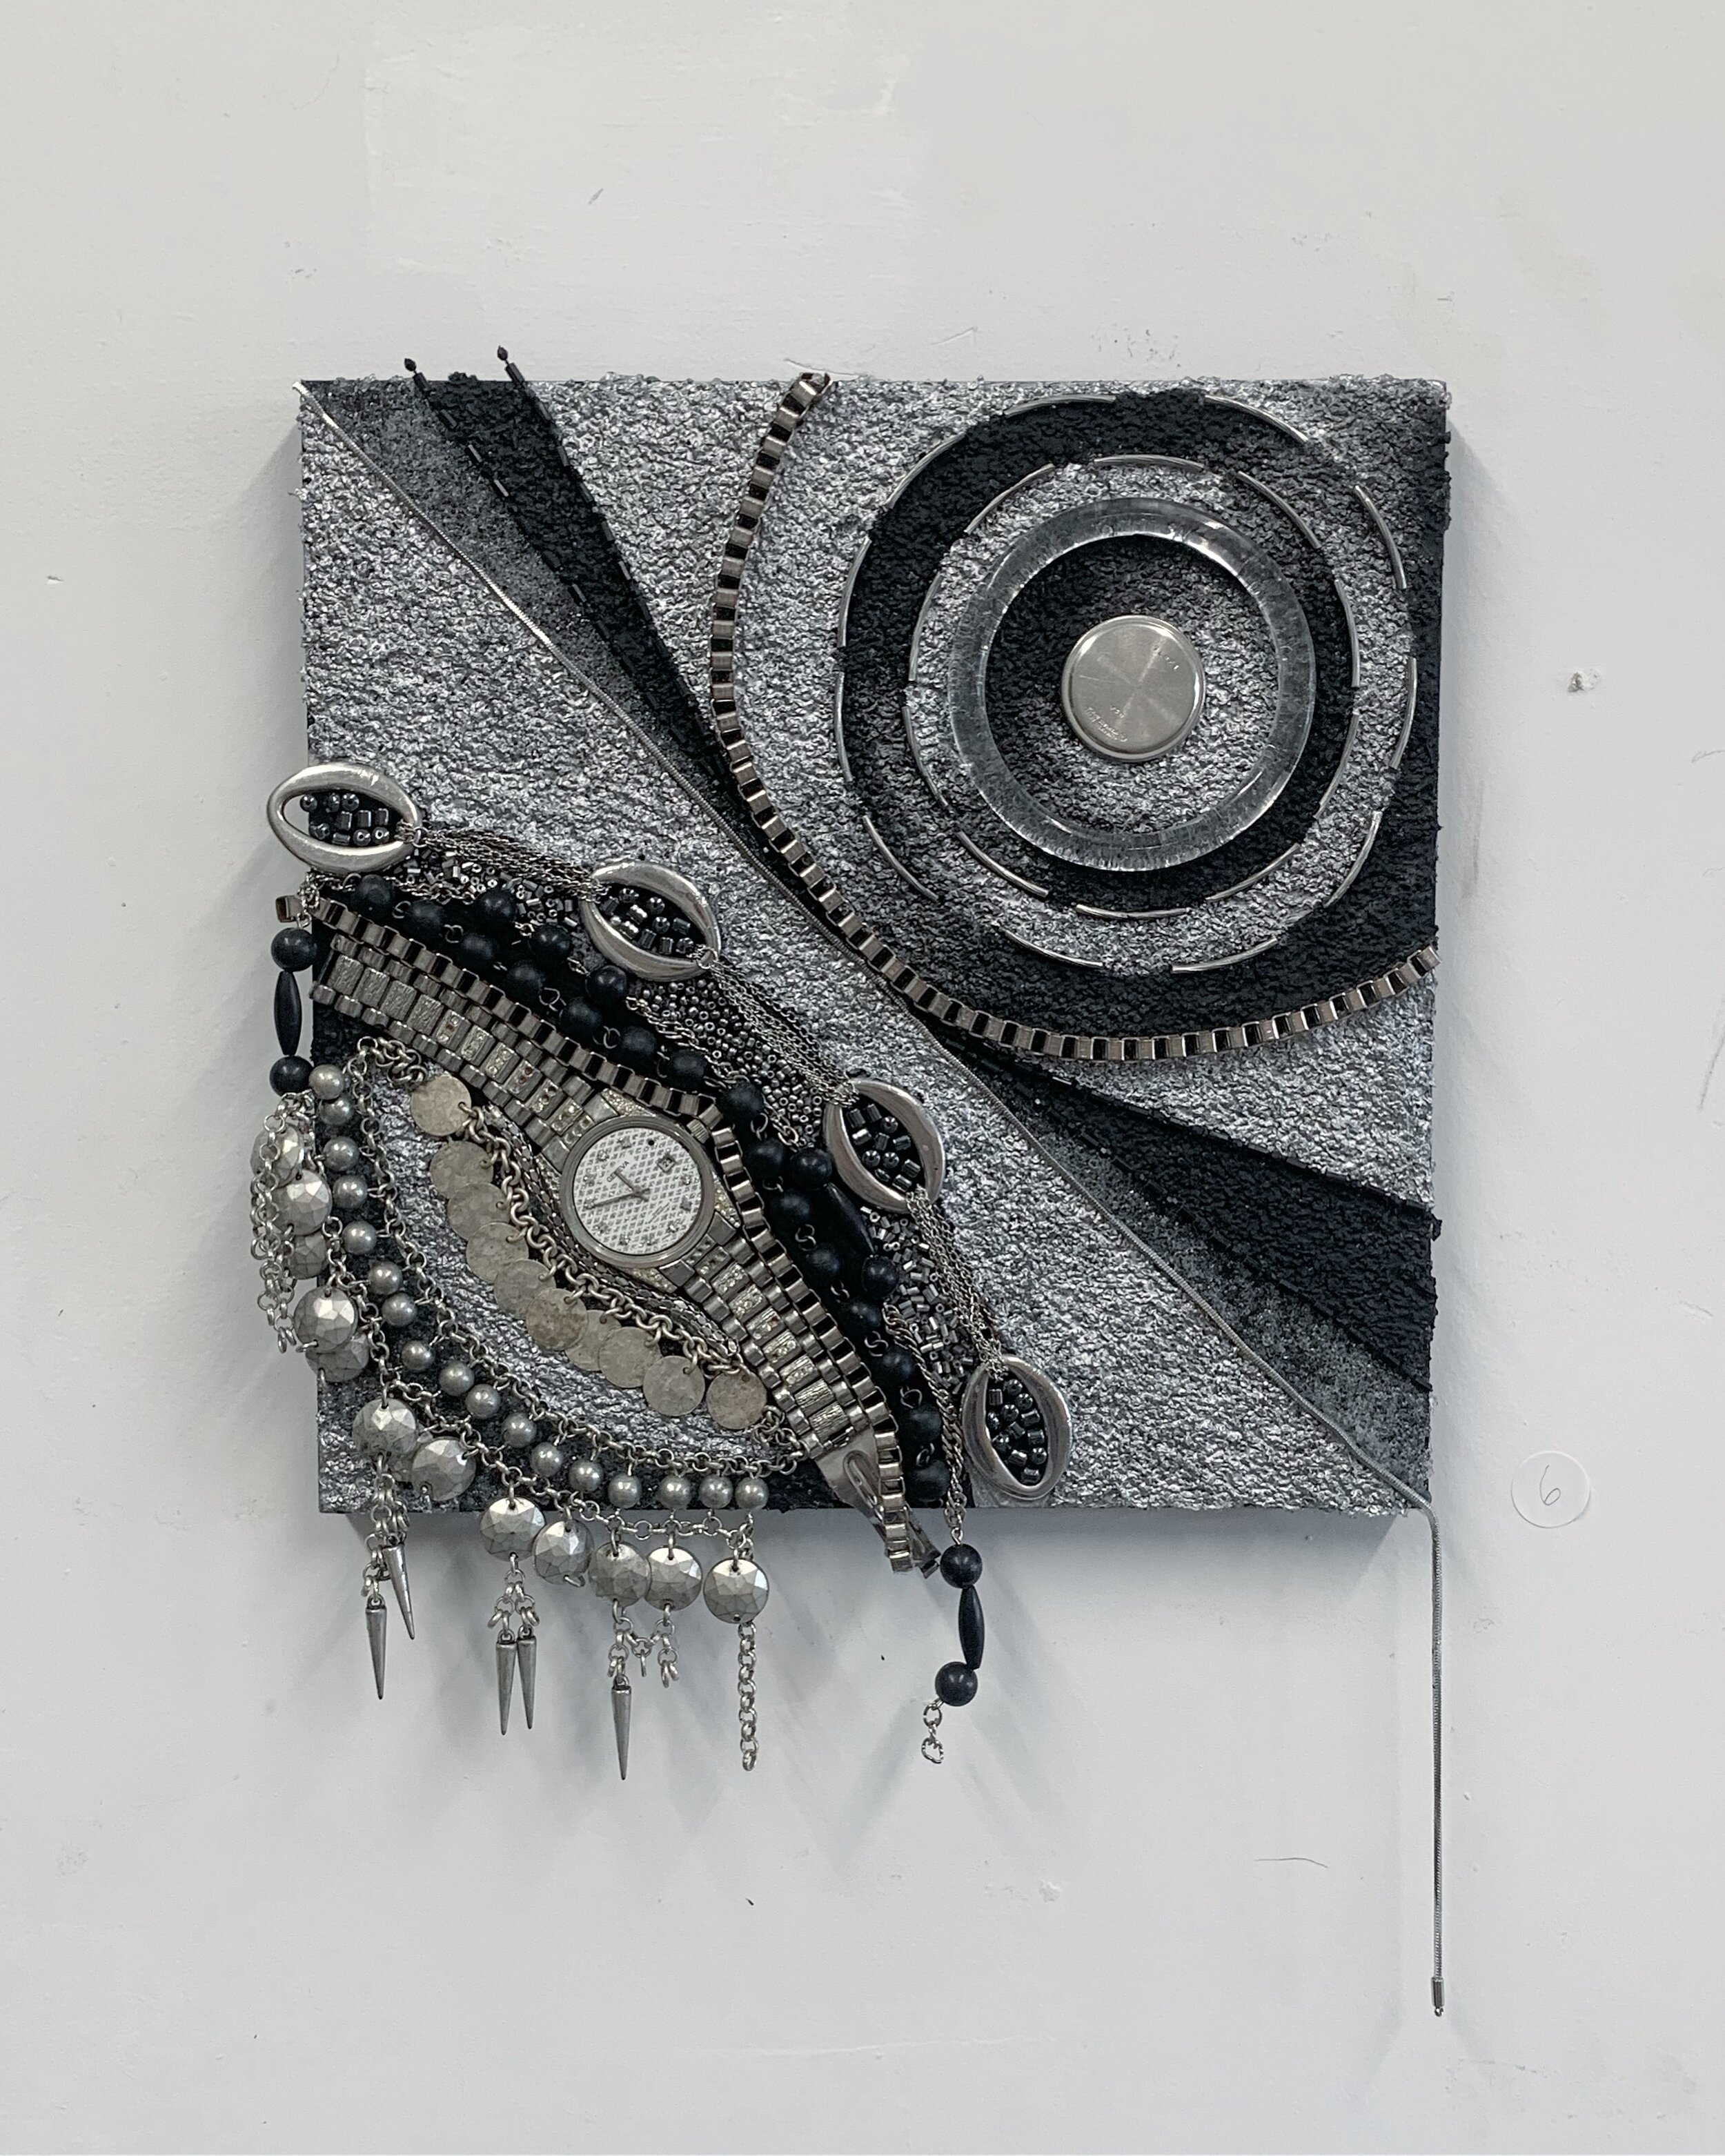   Geneva Watch,  2019 Wrist watch, costume jewelry, necklaces, beads and gel bead medium on panel, 10x10“ 